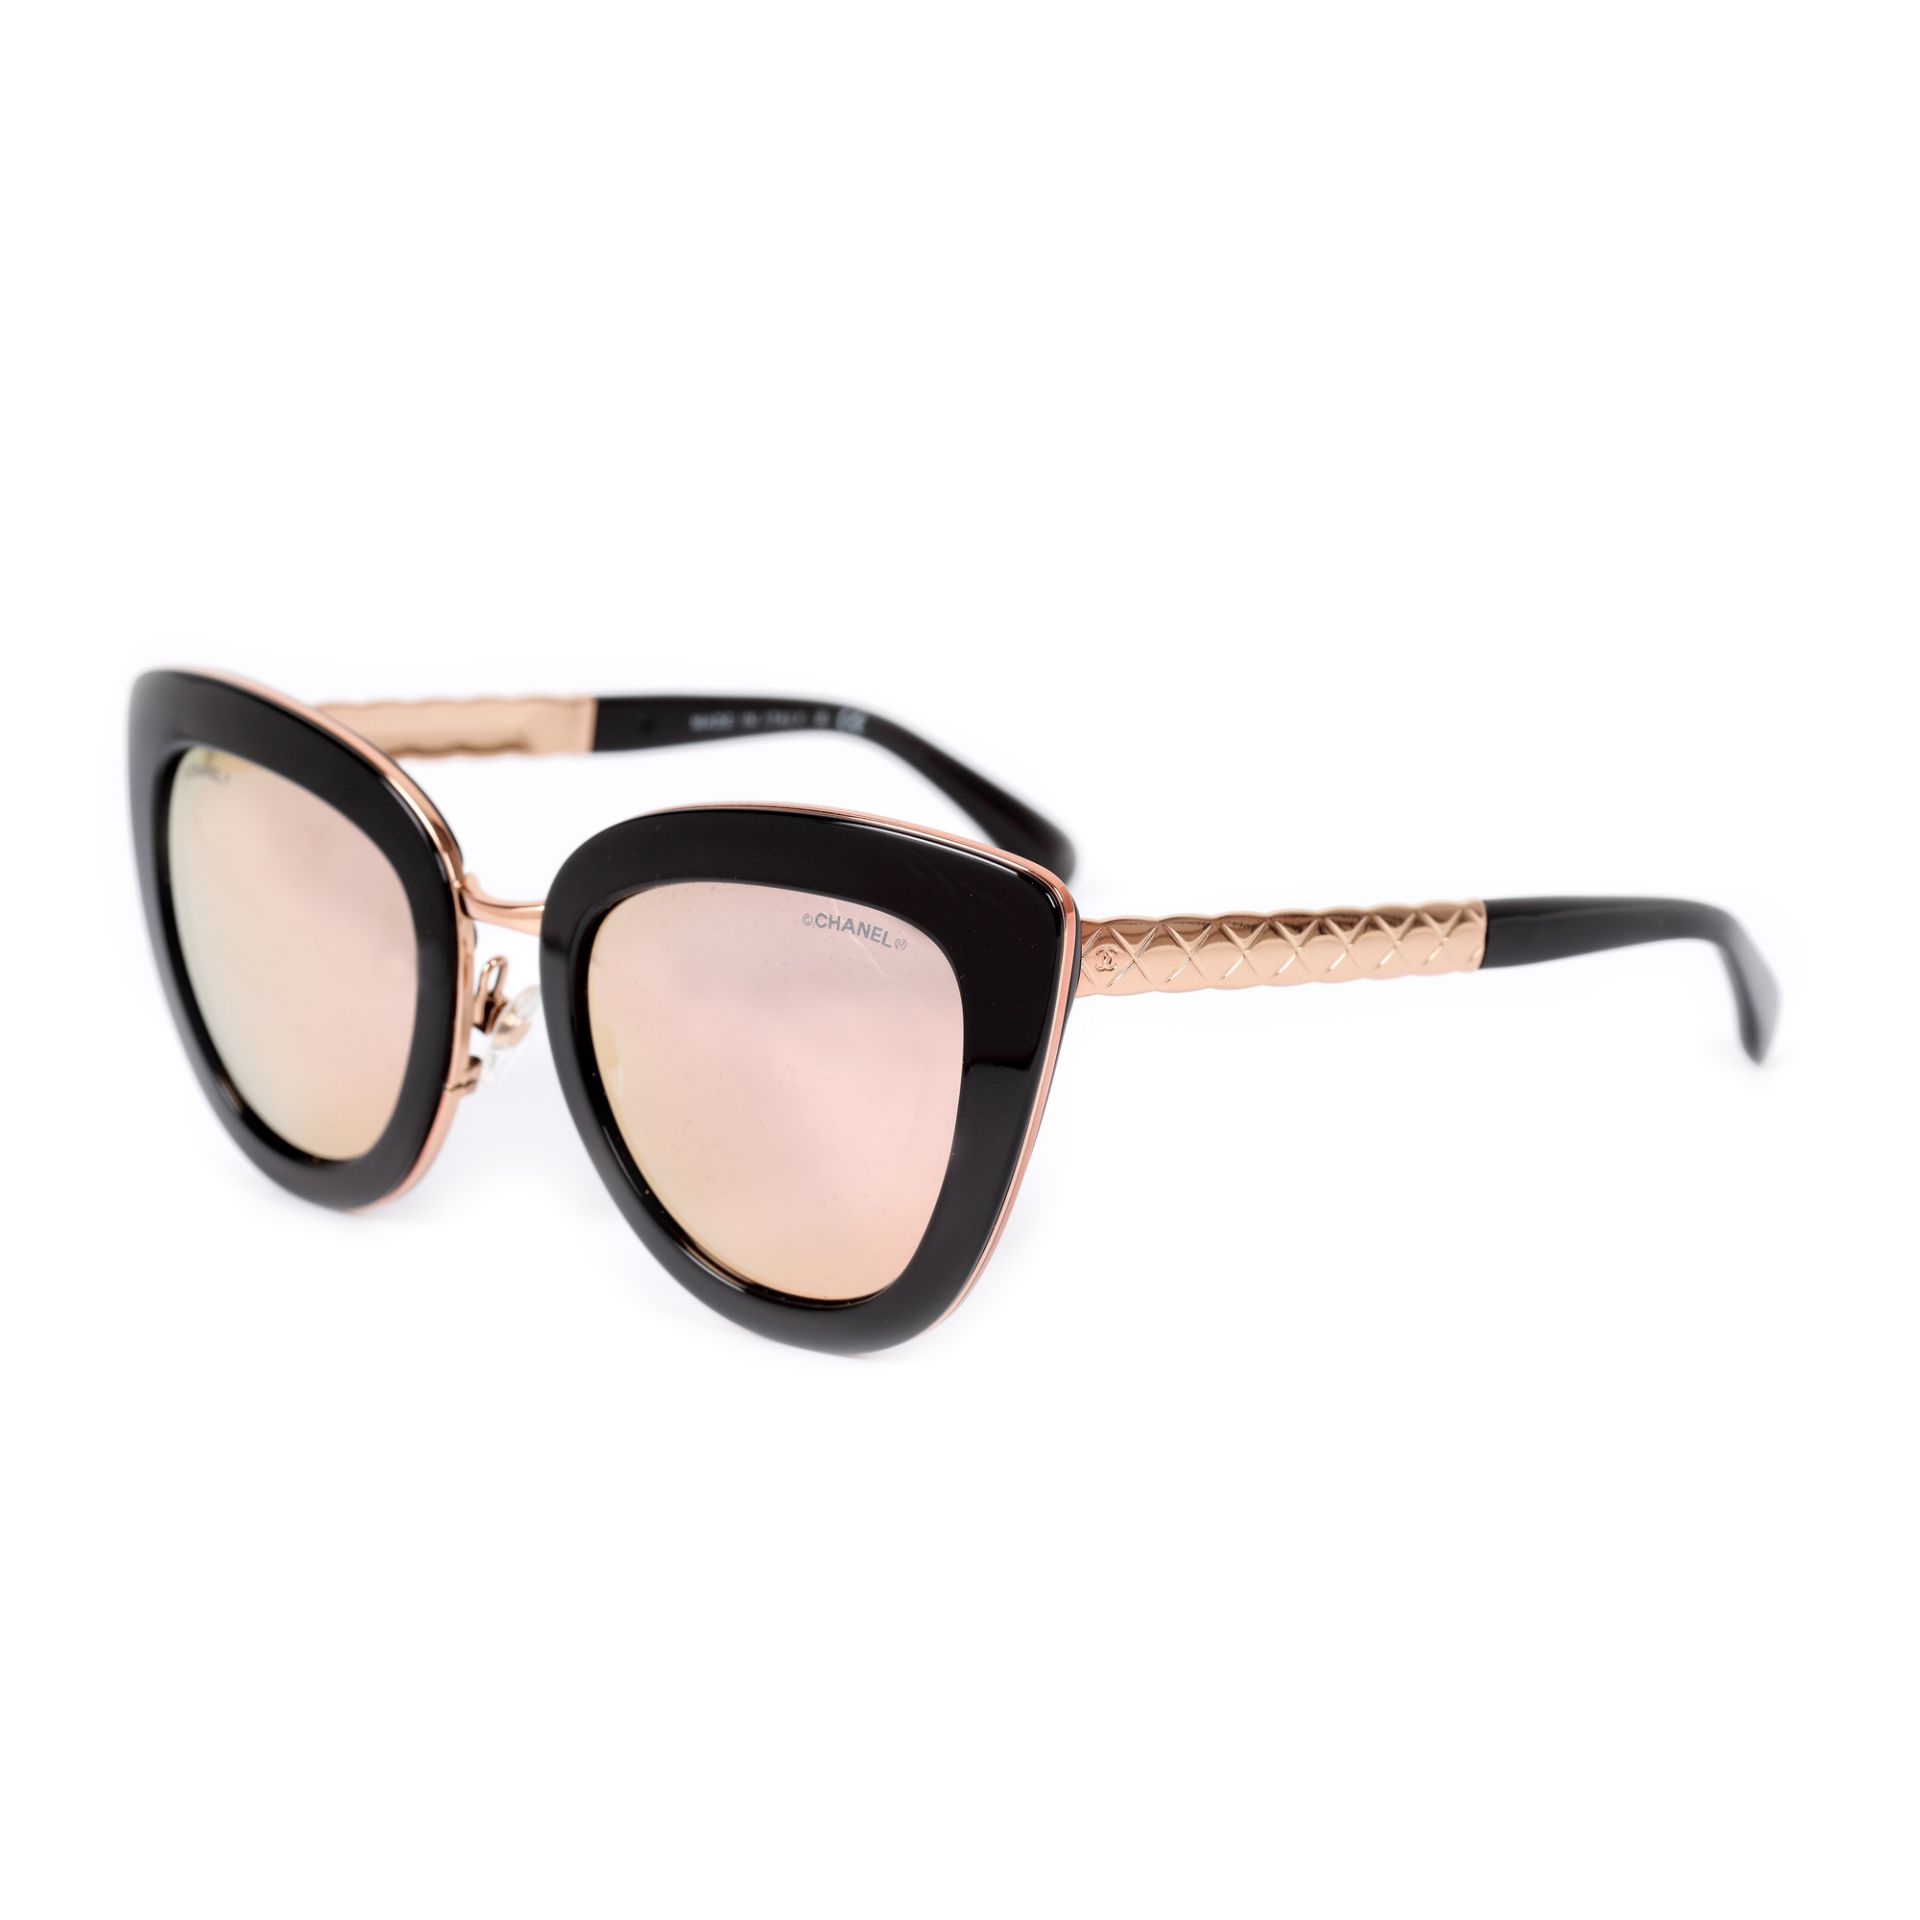 Chanel Cat Eye glasses, women, case - Image 6 of 7